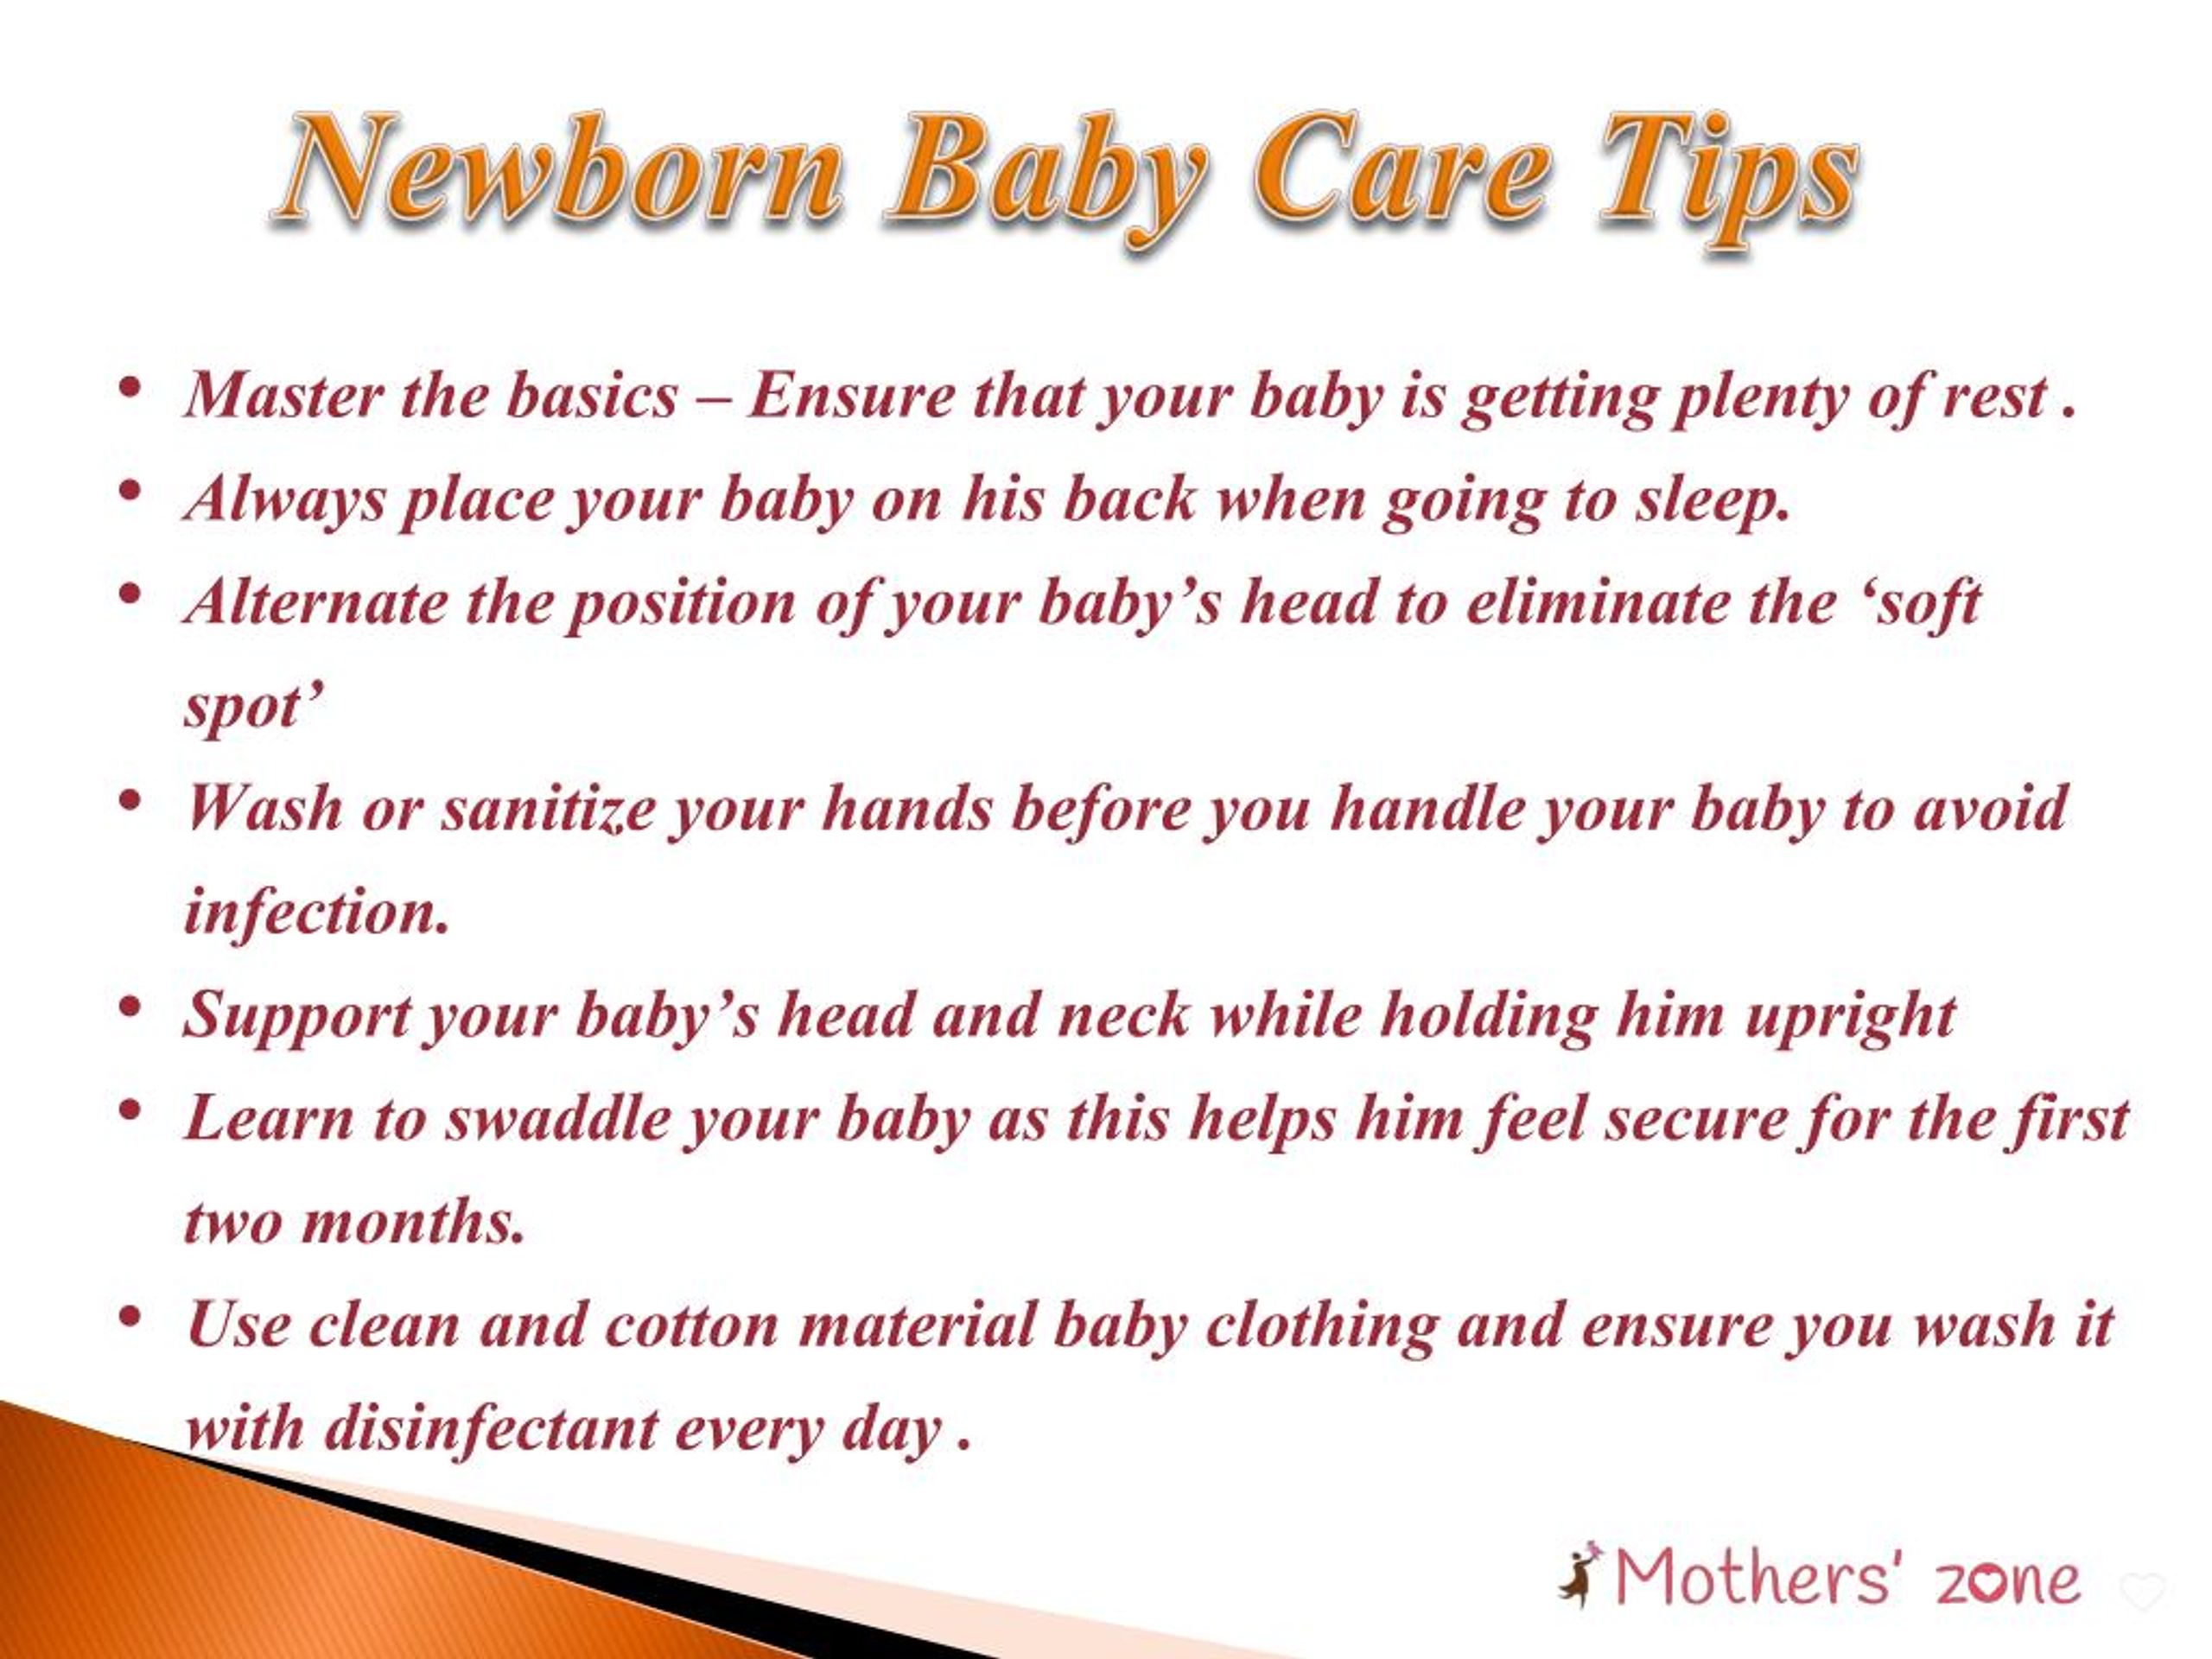 care of newborn ppt presentation